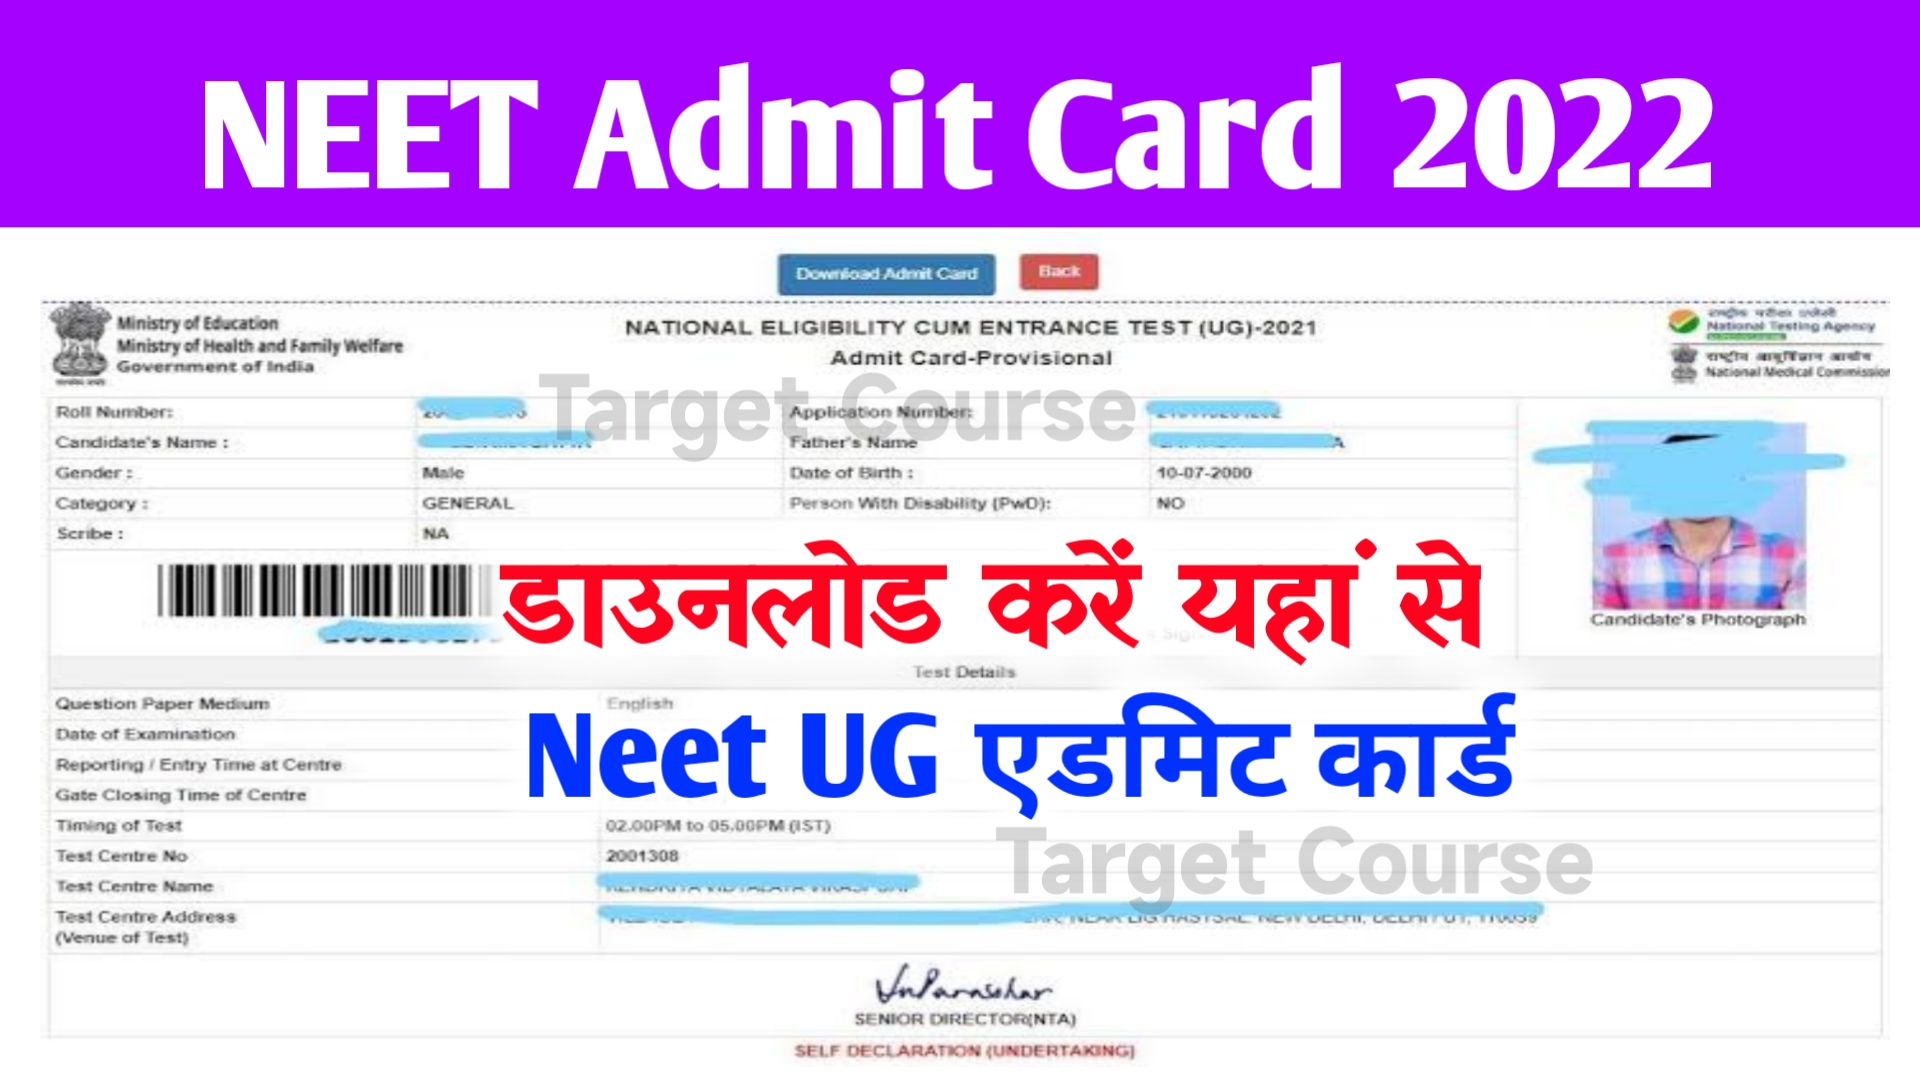 NEET Admit Card 2022 Download Link ~ Hall Ticket Link @neet.nta.nic.in